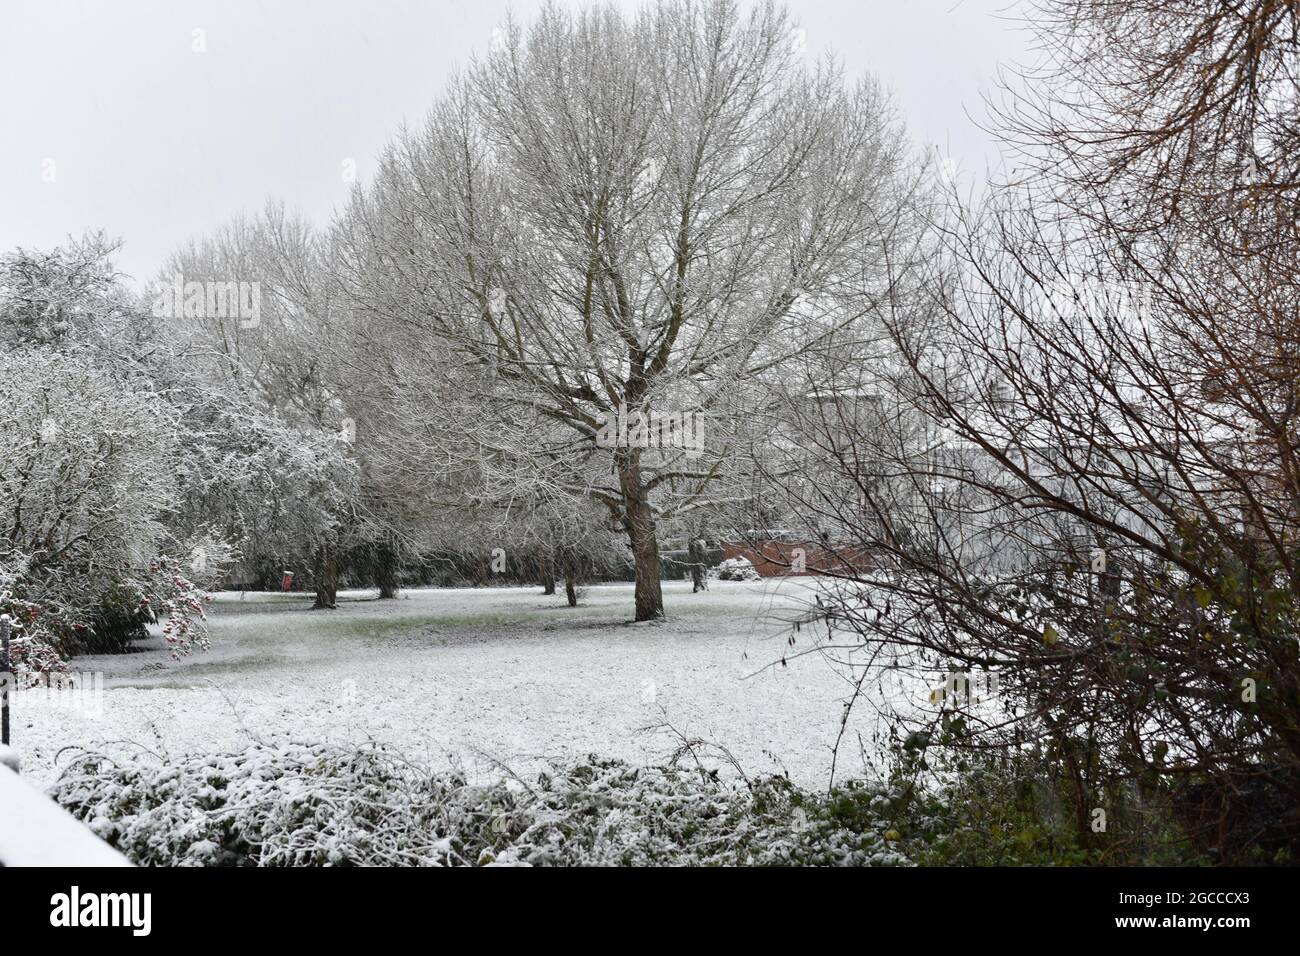 A snowy day in a park near Hendon, London, UK Stock Photo